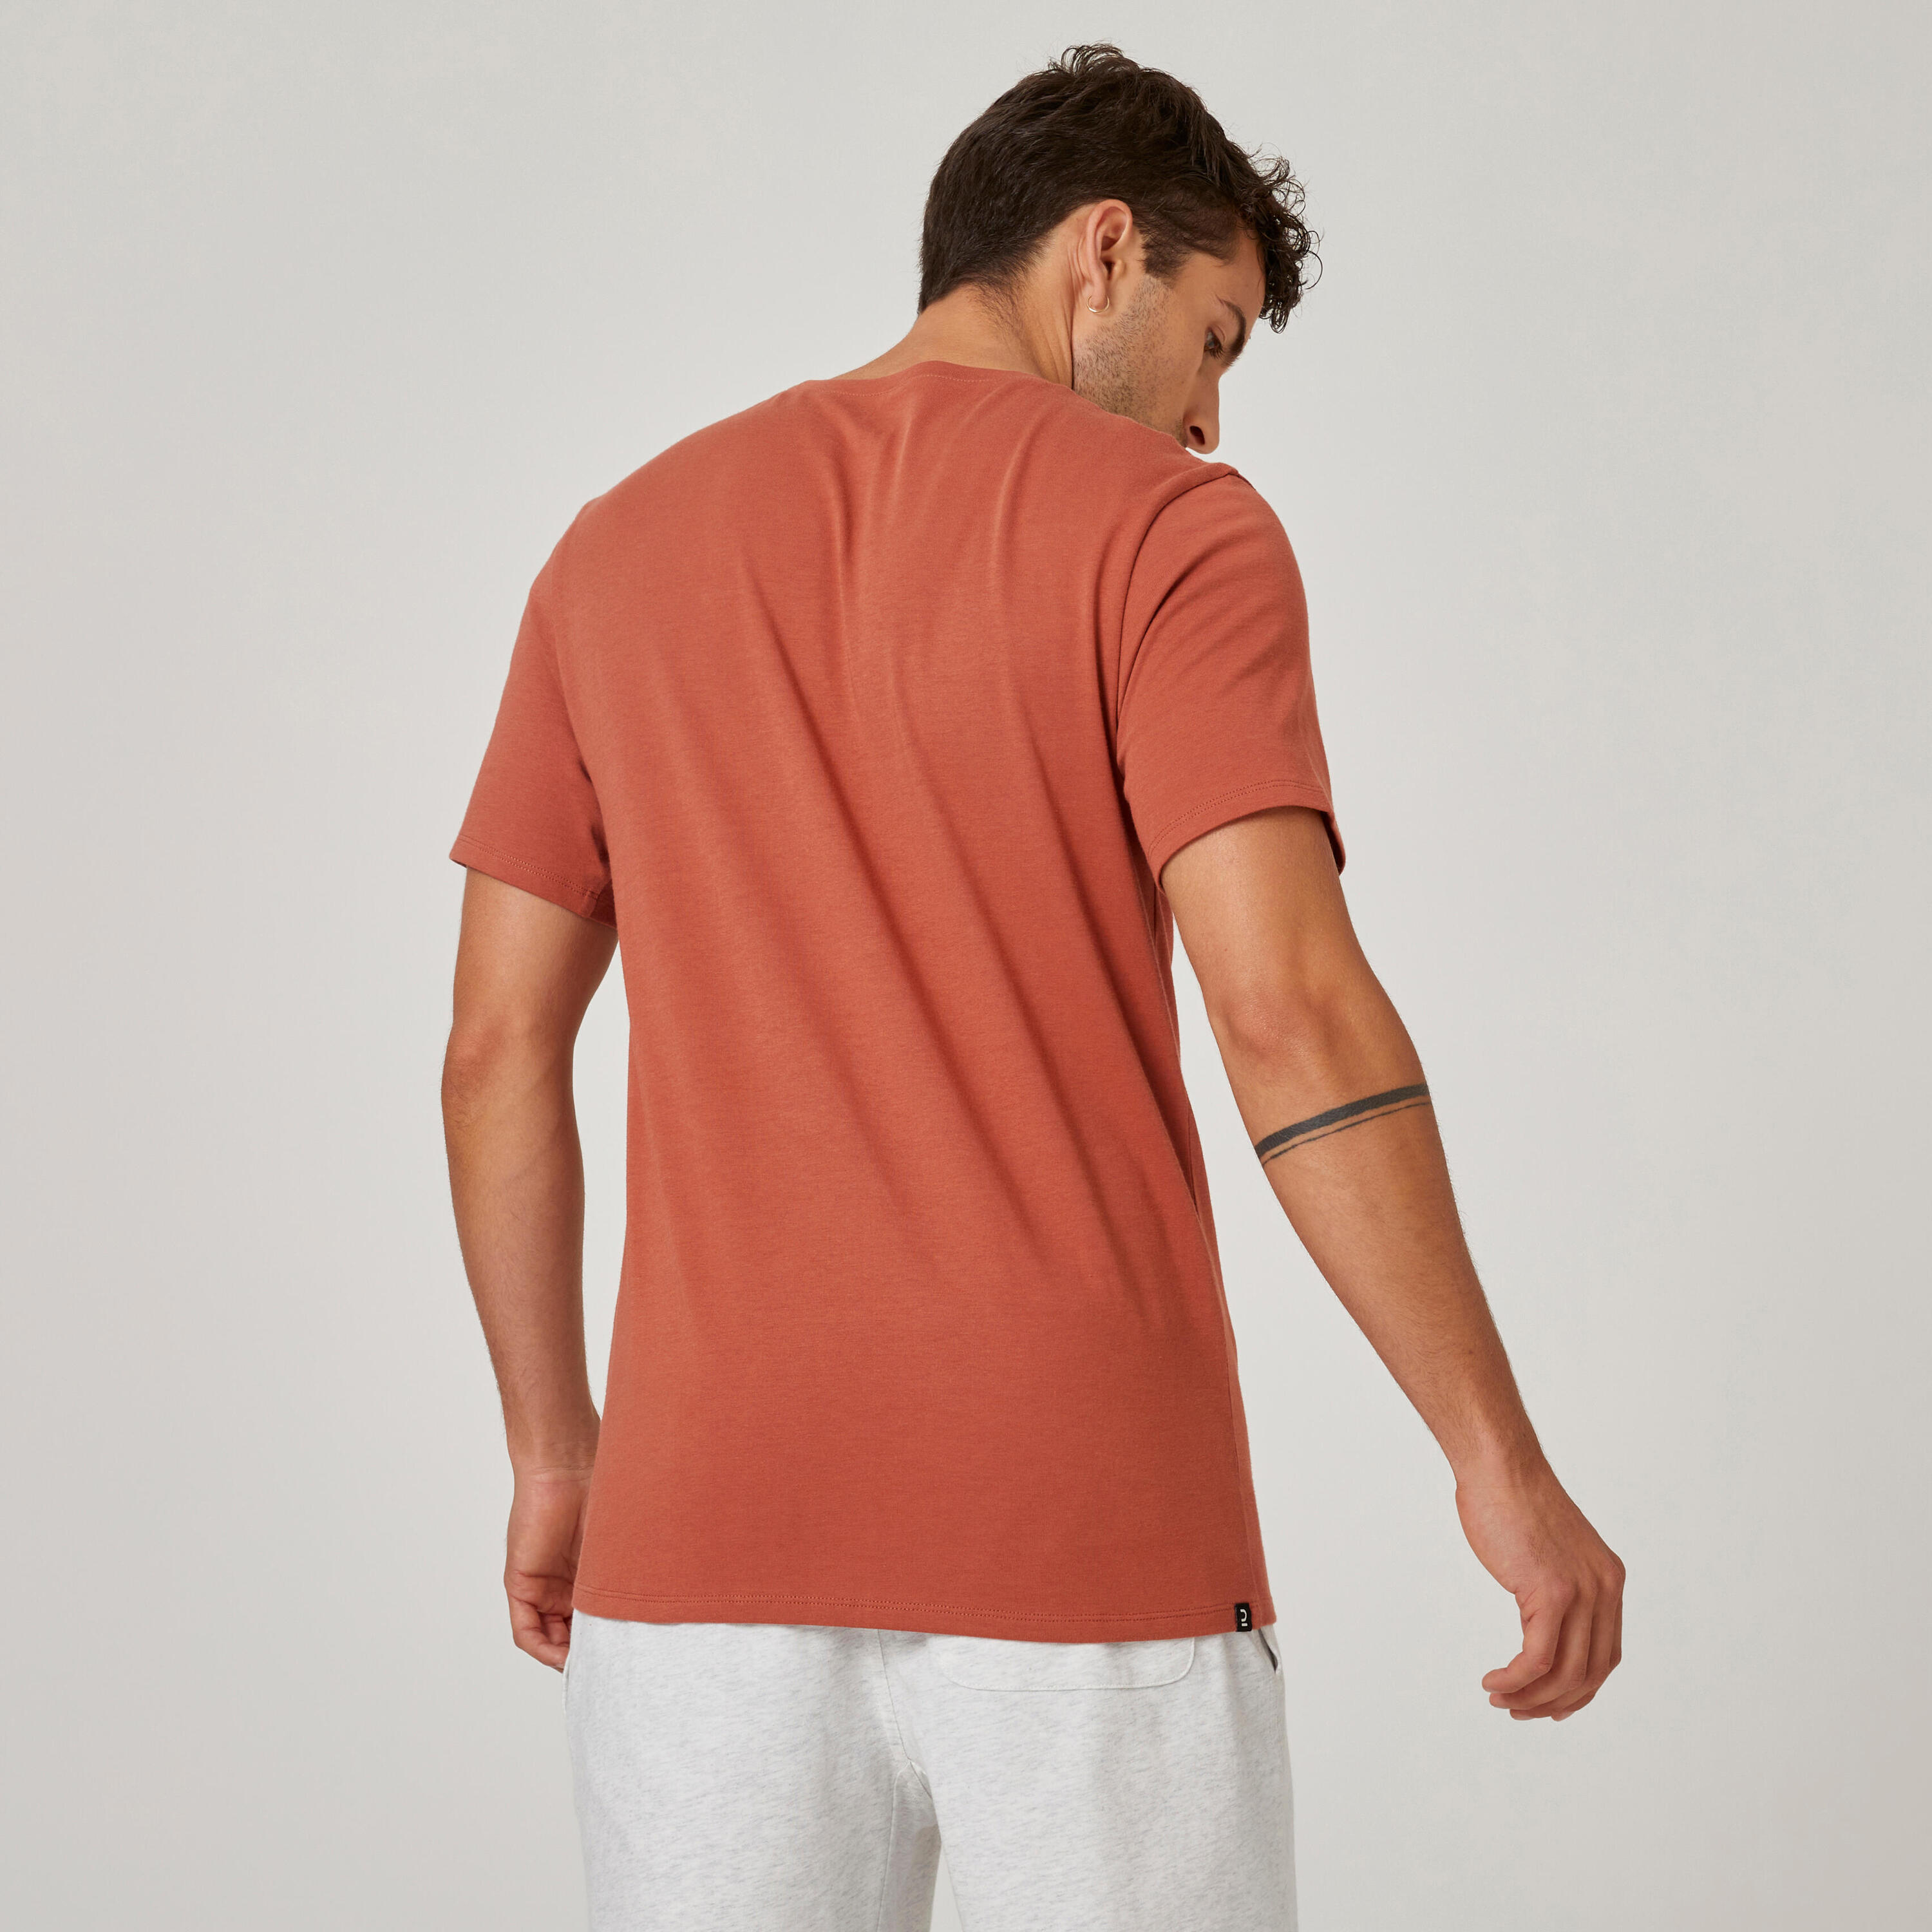 Men's Slim-Fit Fitness T-Shirt 500 - Sepia 4/8